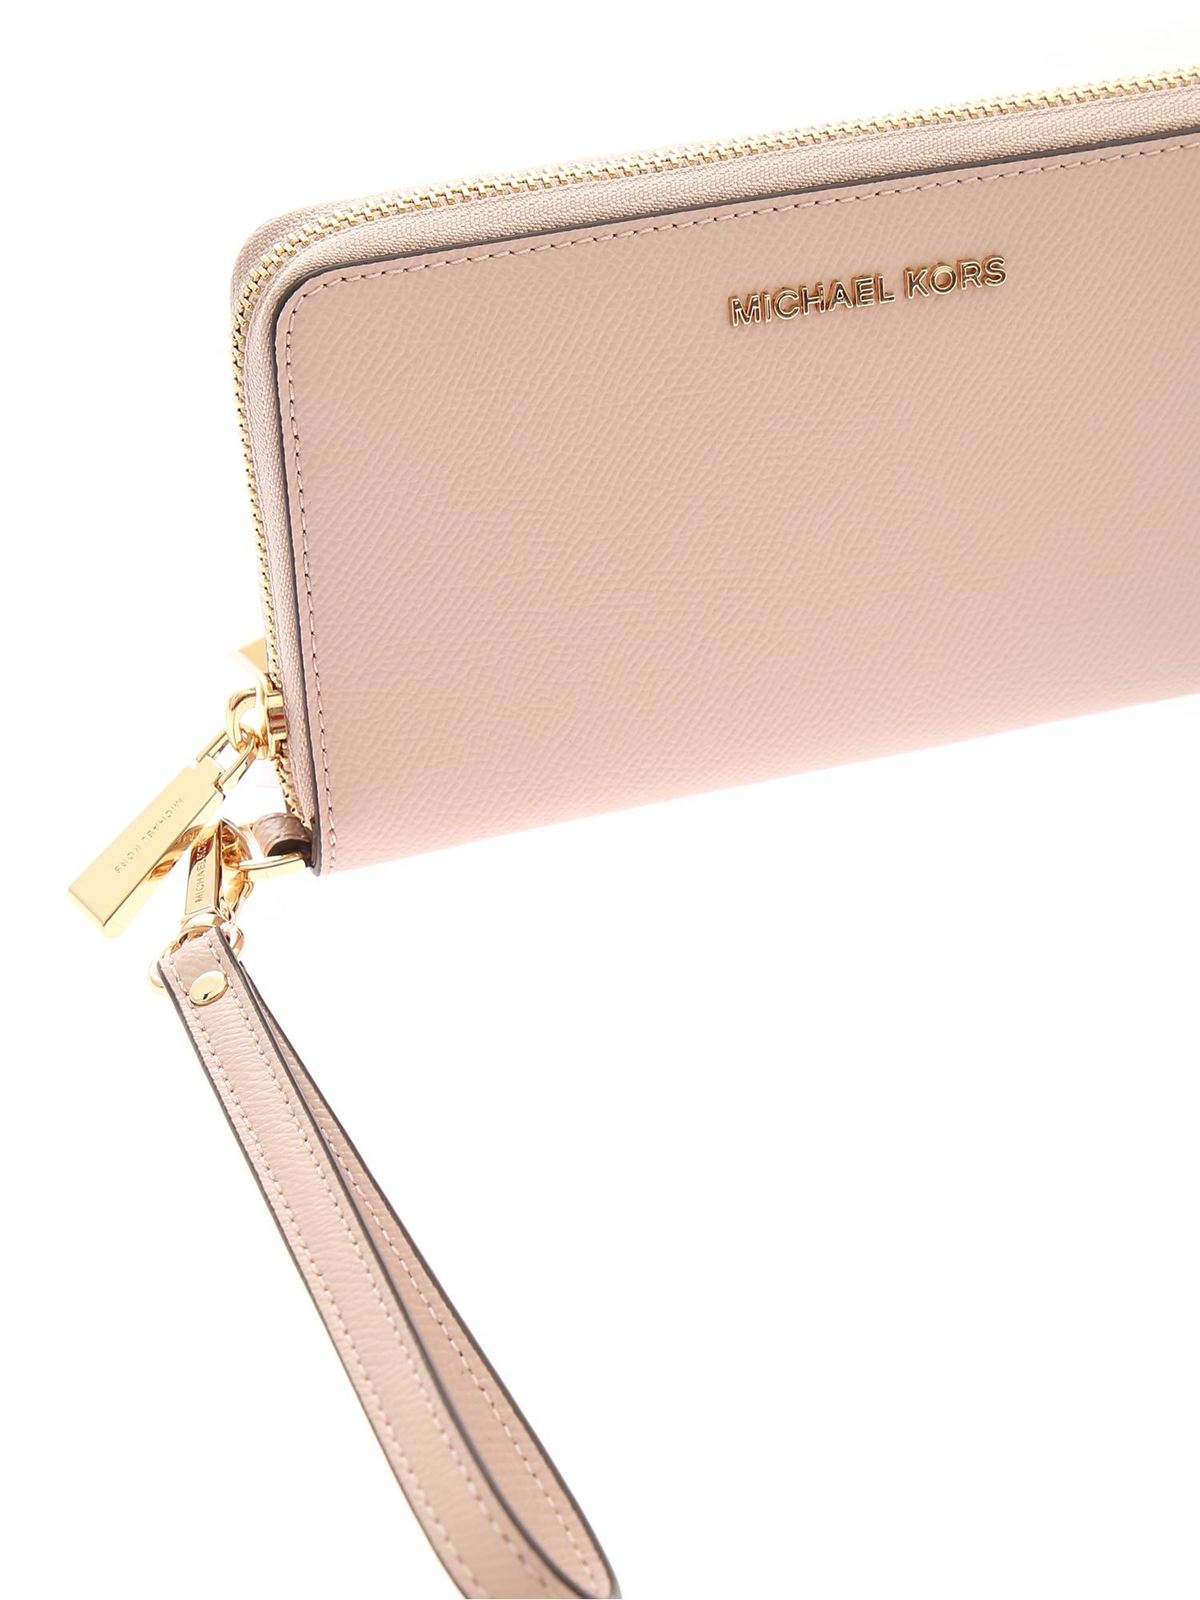 Wallets & purses Michael Kors - Jet Set wallet in Soft Pink color